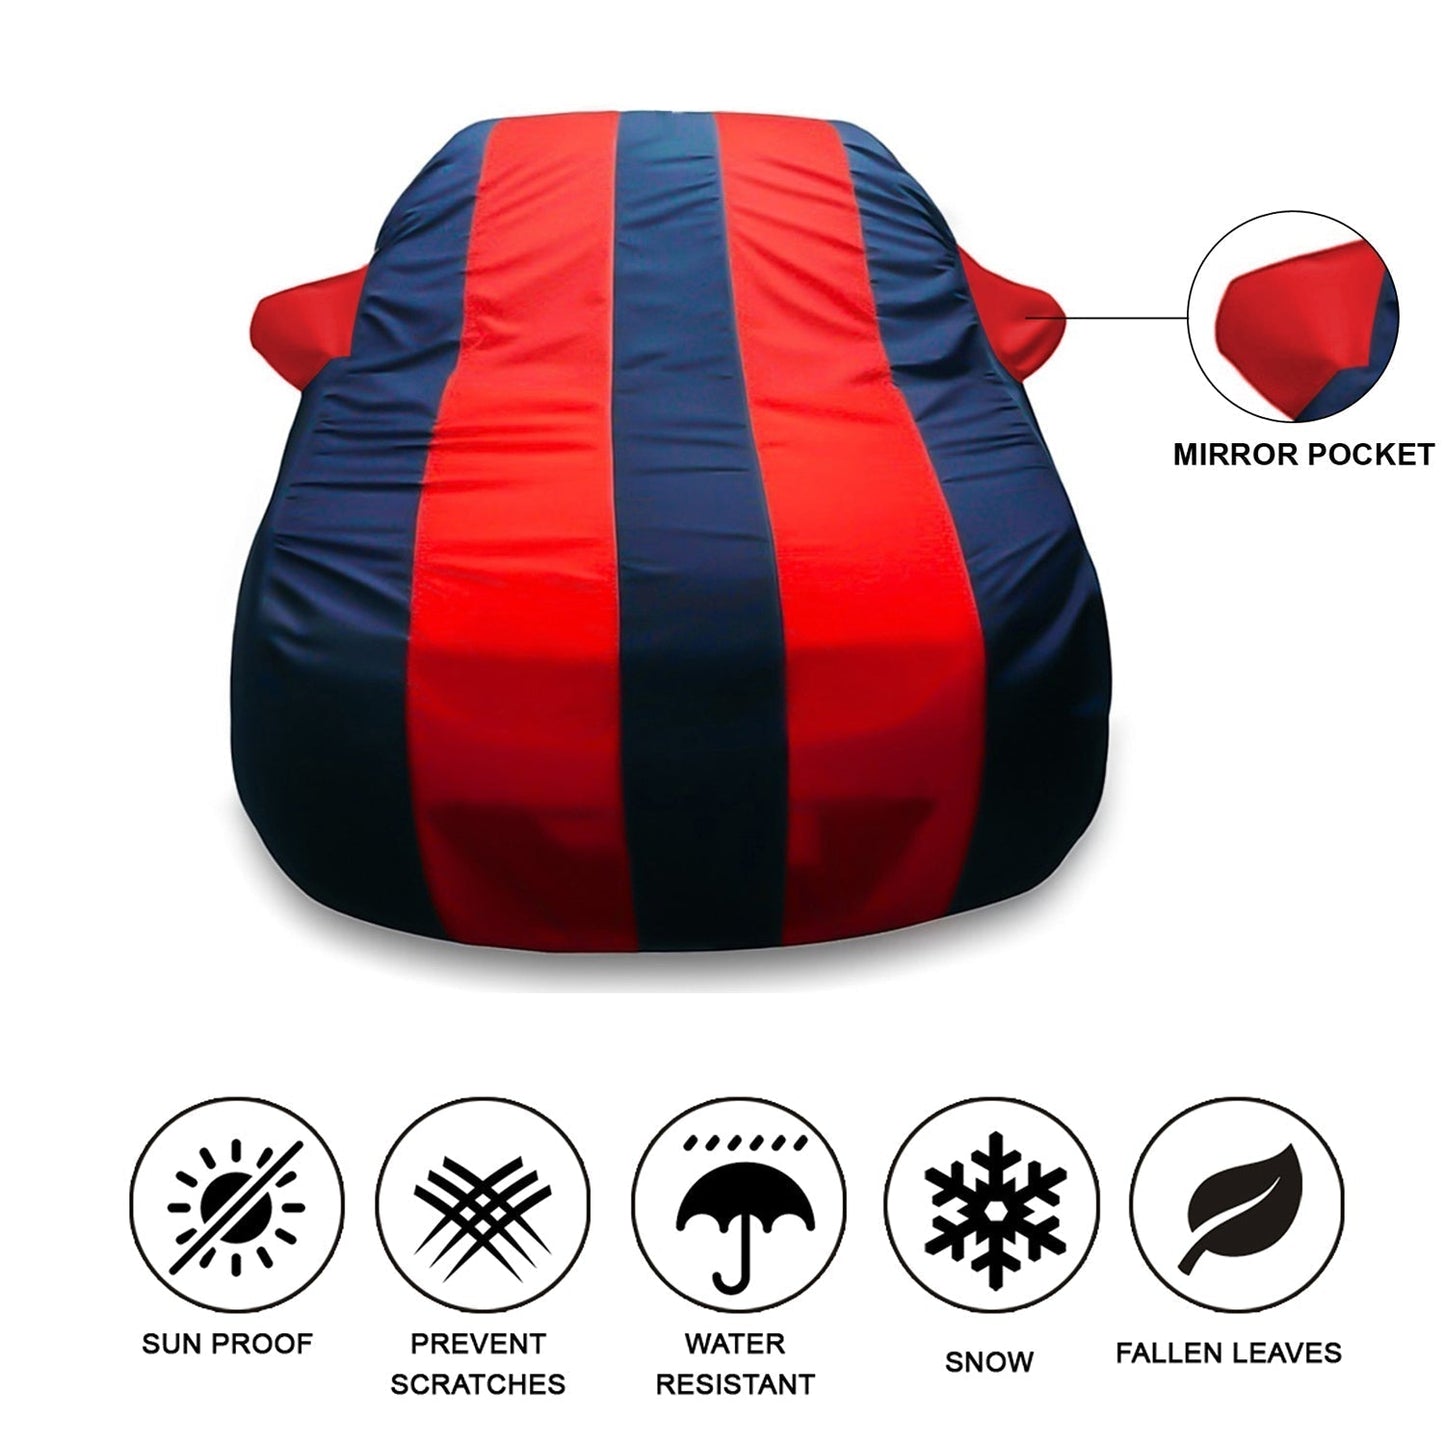 Oshotto Taffeta Car Body Cover with Mirror Pocket For Toyota Etios (Red, Blue)